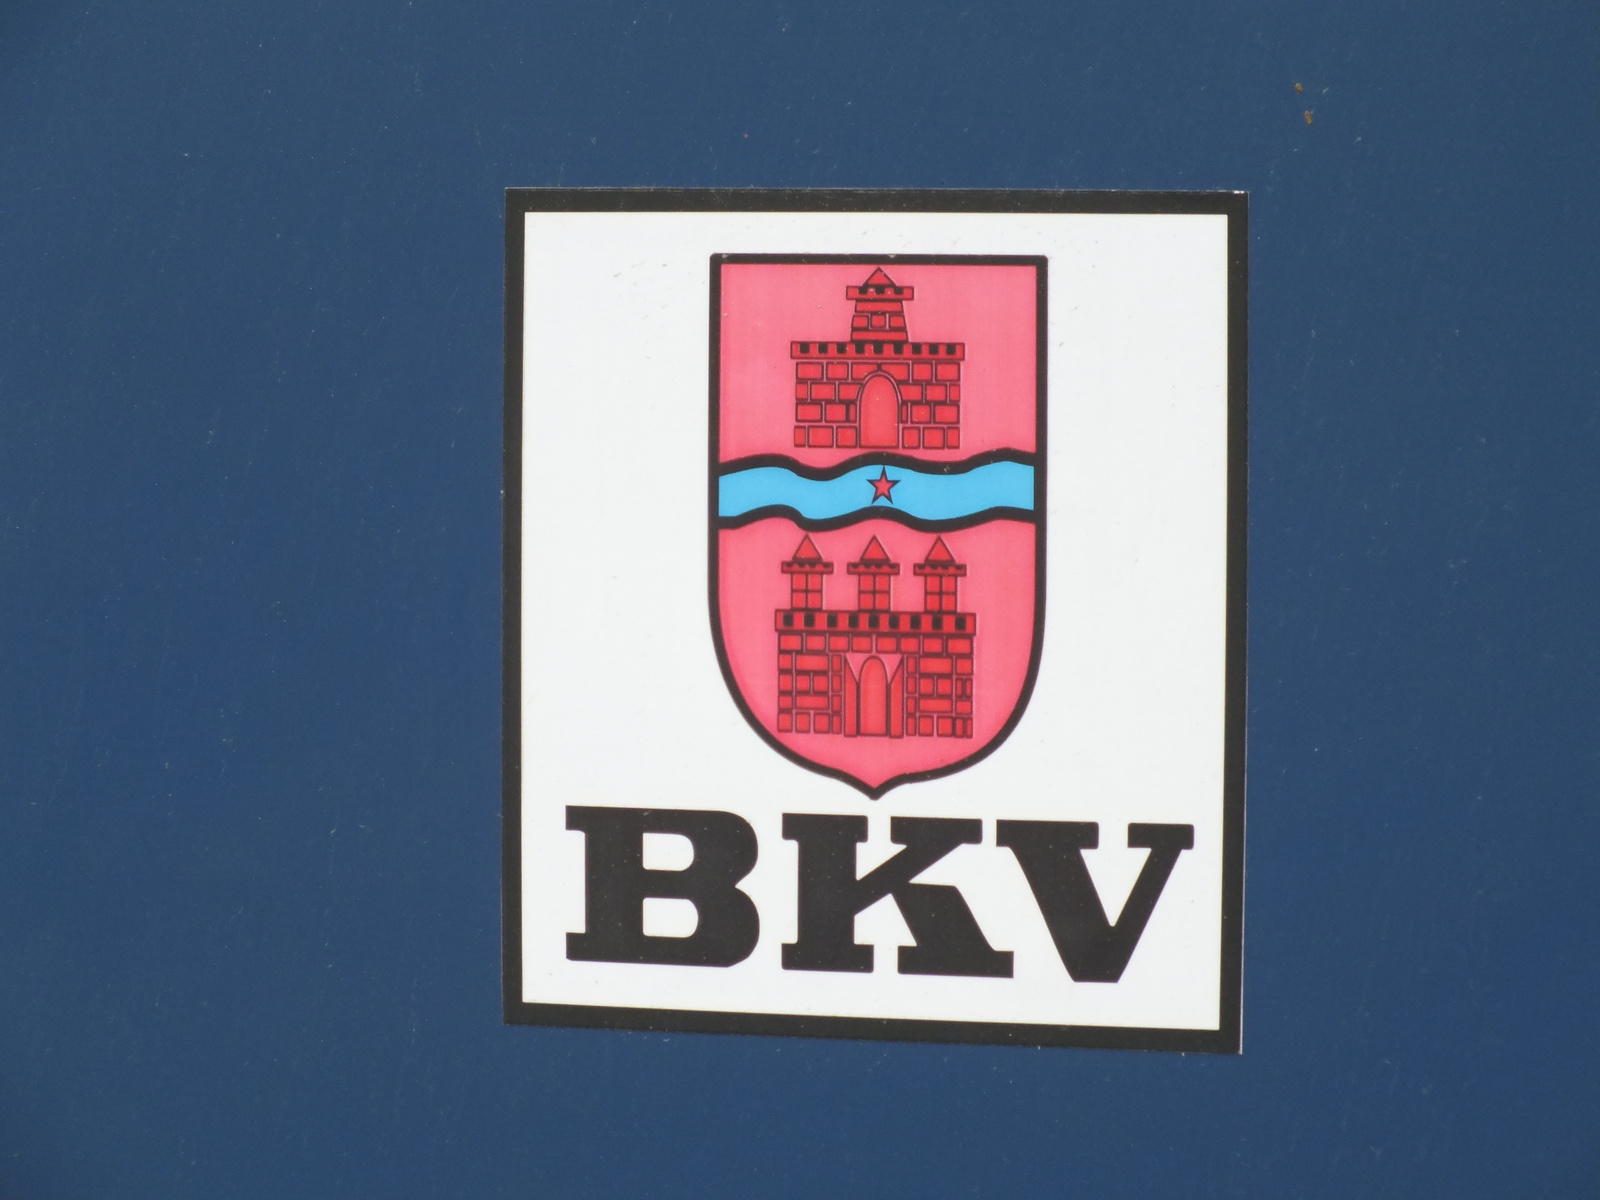 BKV régi logo